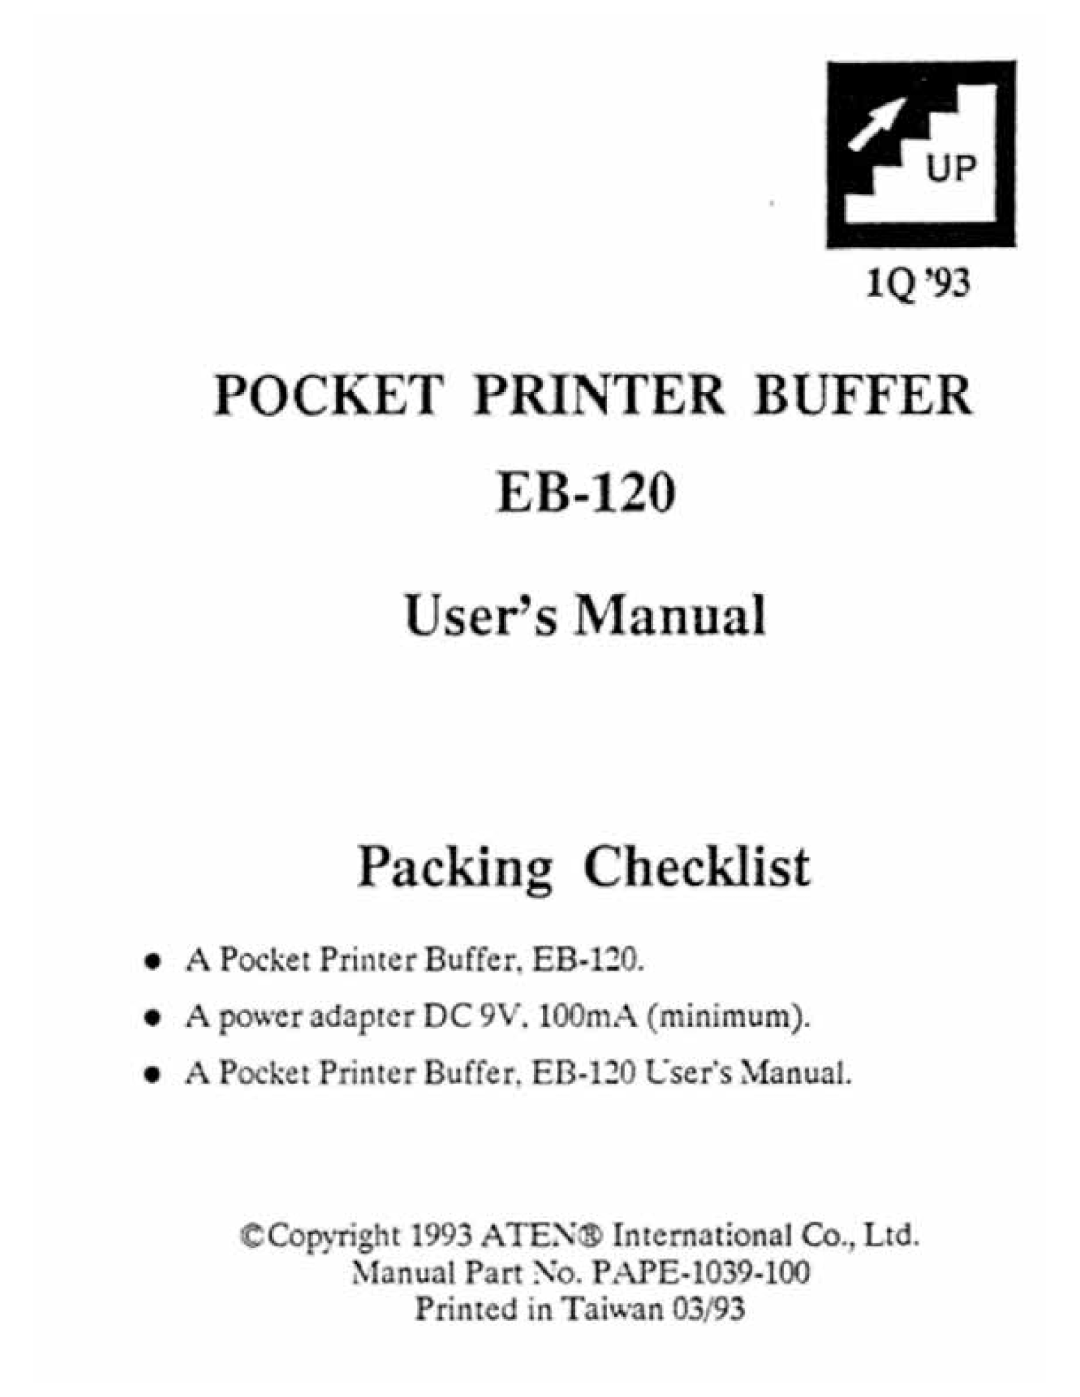 QVS EB-120 manual 